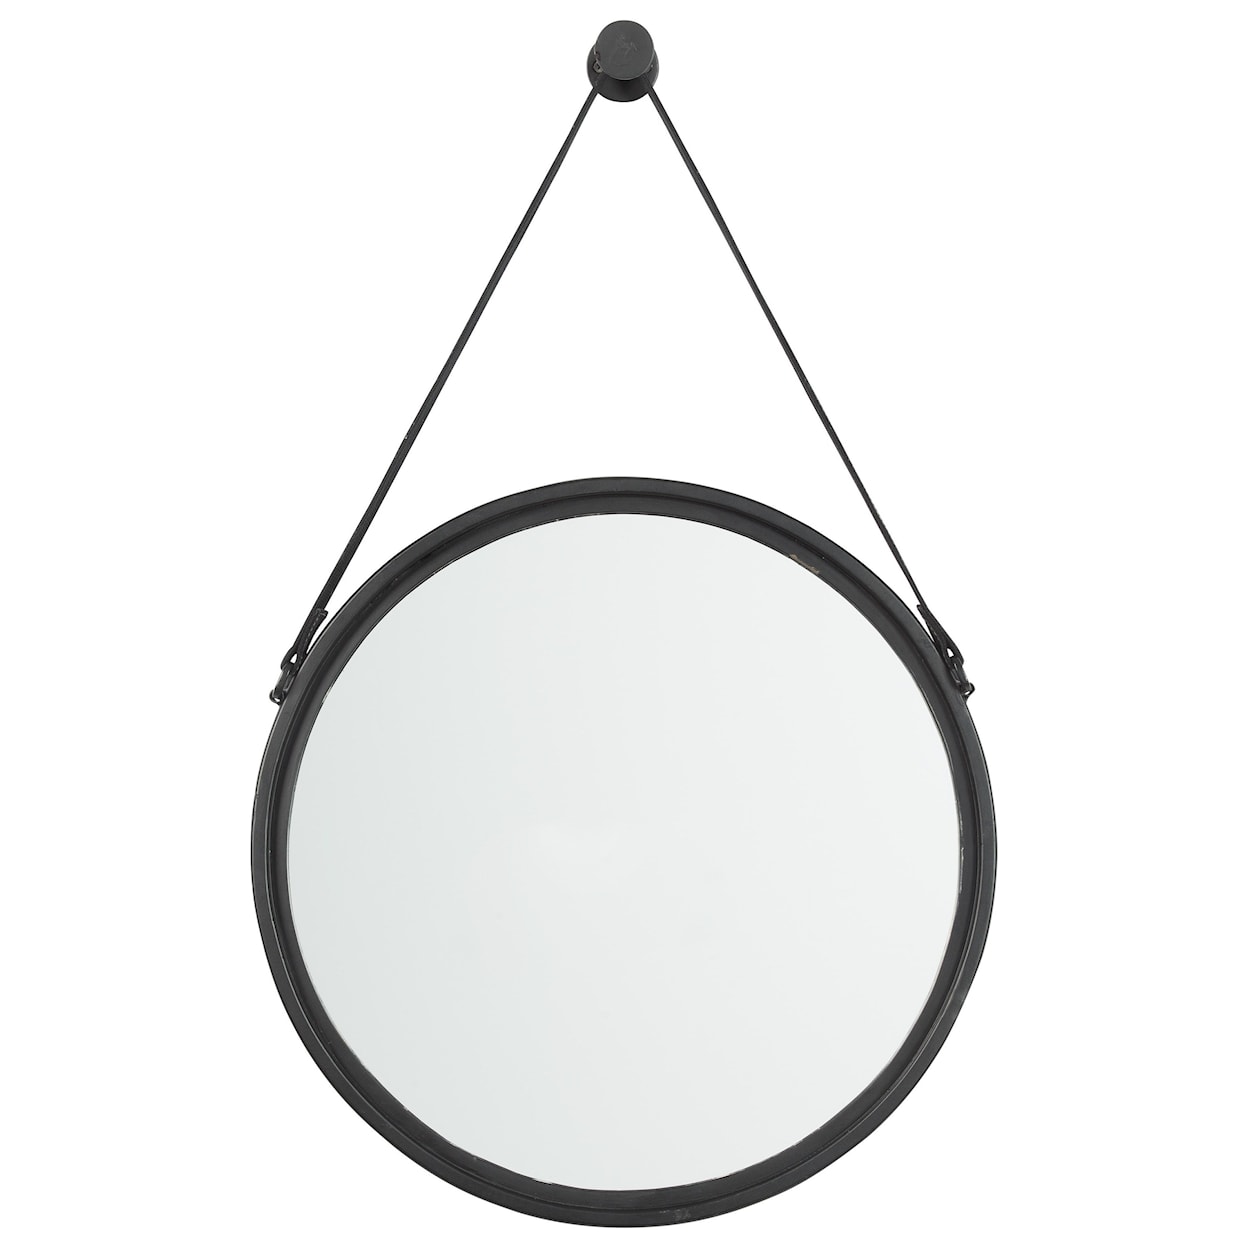 Signature Design by Ashley Furniture Accent Mirrors Dusan Black Accent Mirror